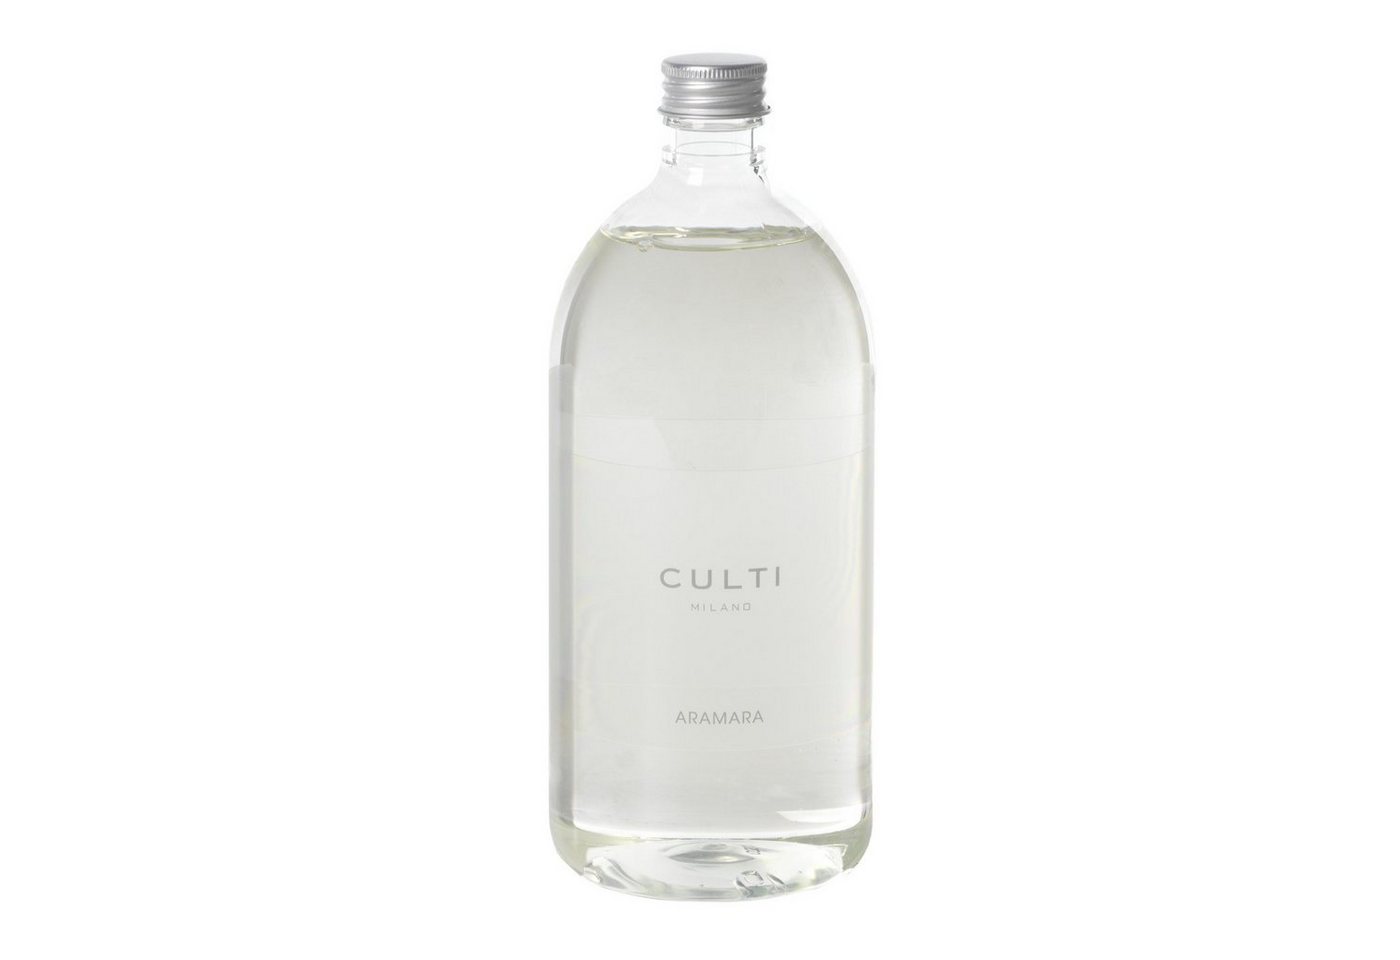 Culti Milano Raumduft-Nachfüllflasche Aramara 1000 ml von Culti Milano